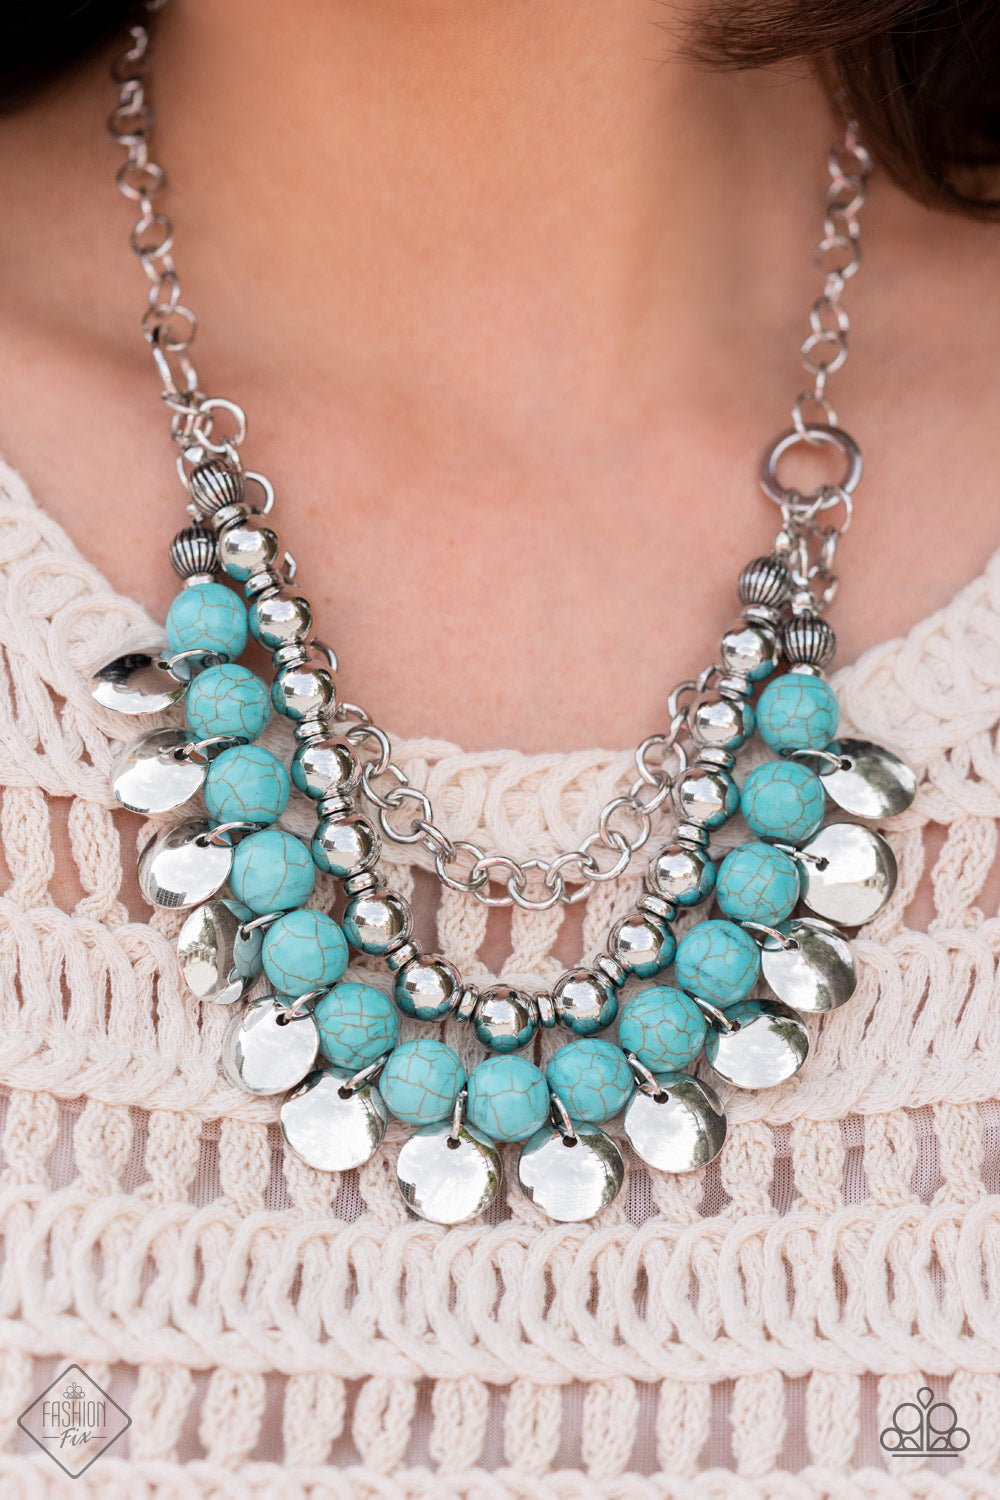 Paparazzi “Leave Her Wild” Blue Necklace Earring Set - Cindysblingboutique